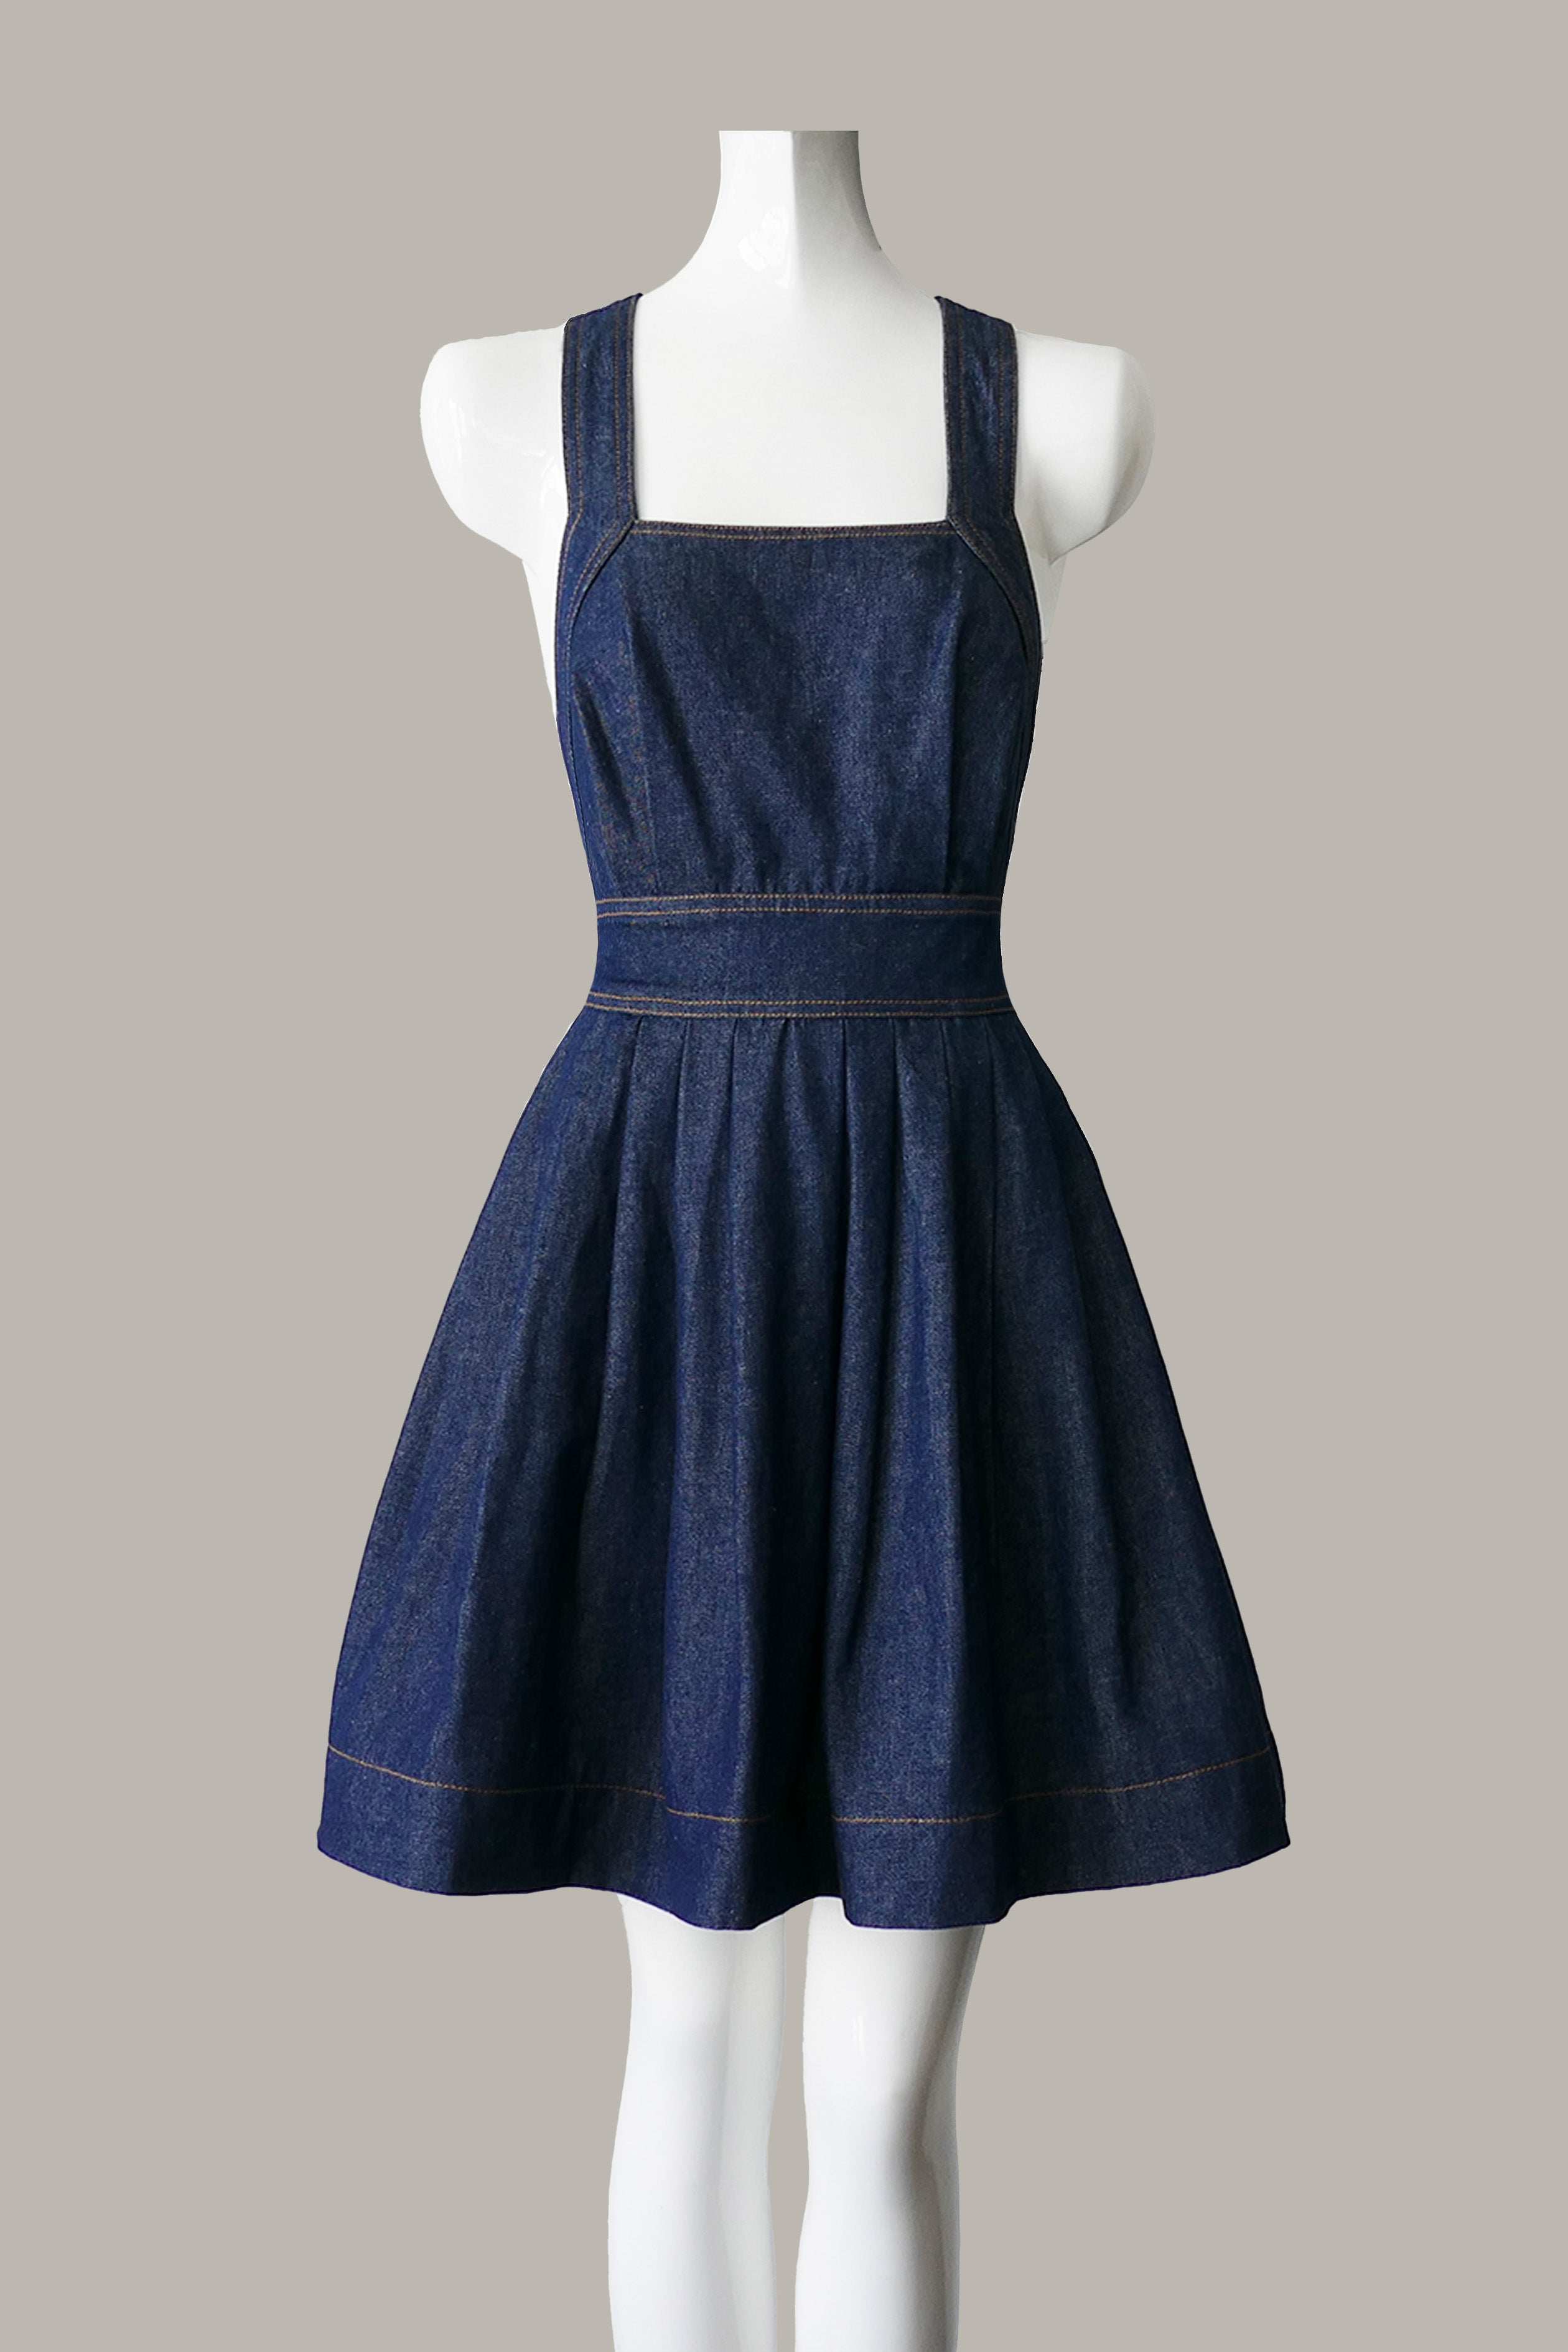 Buy Women Denim Pinafore Midi Dress - A-Line Dresses Online India - FabAlley